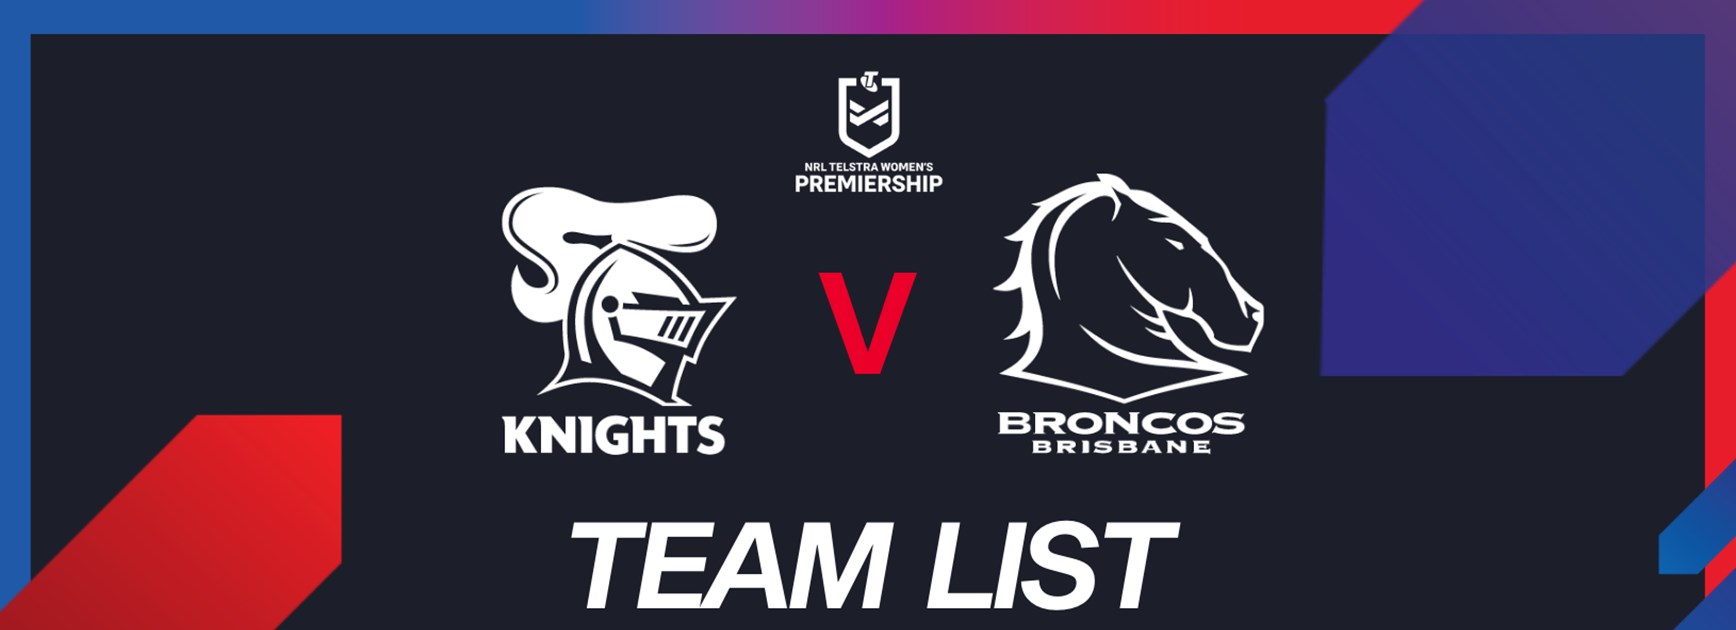 Knights v Broncos Round 2 NRLW team list